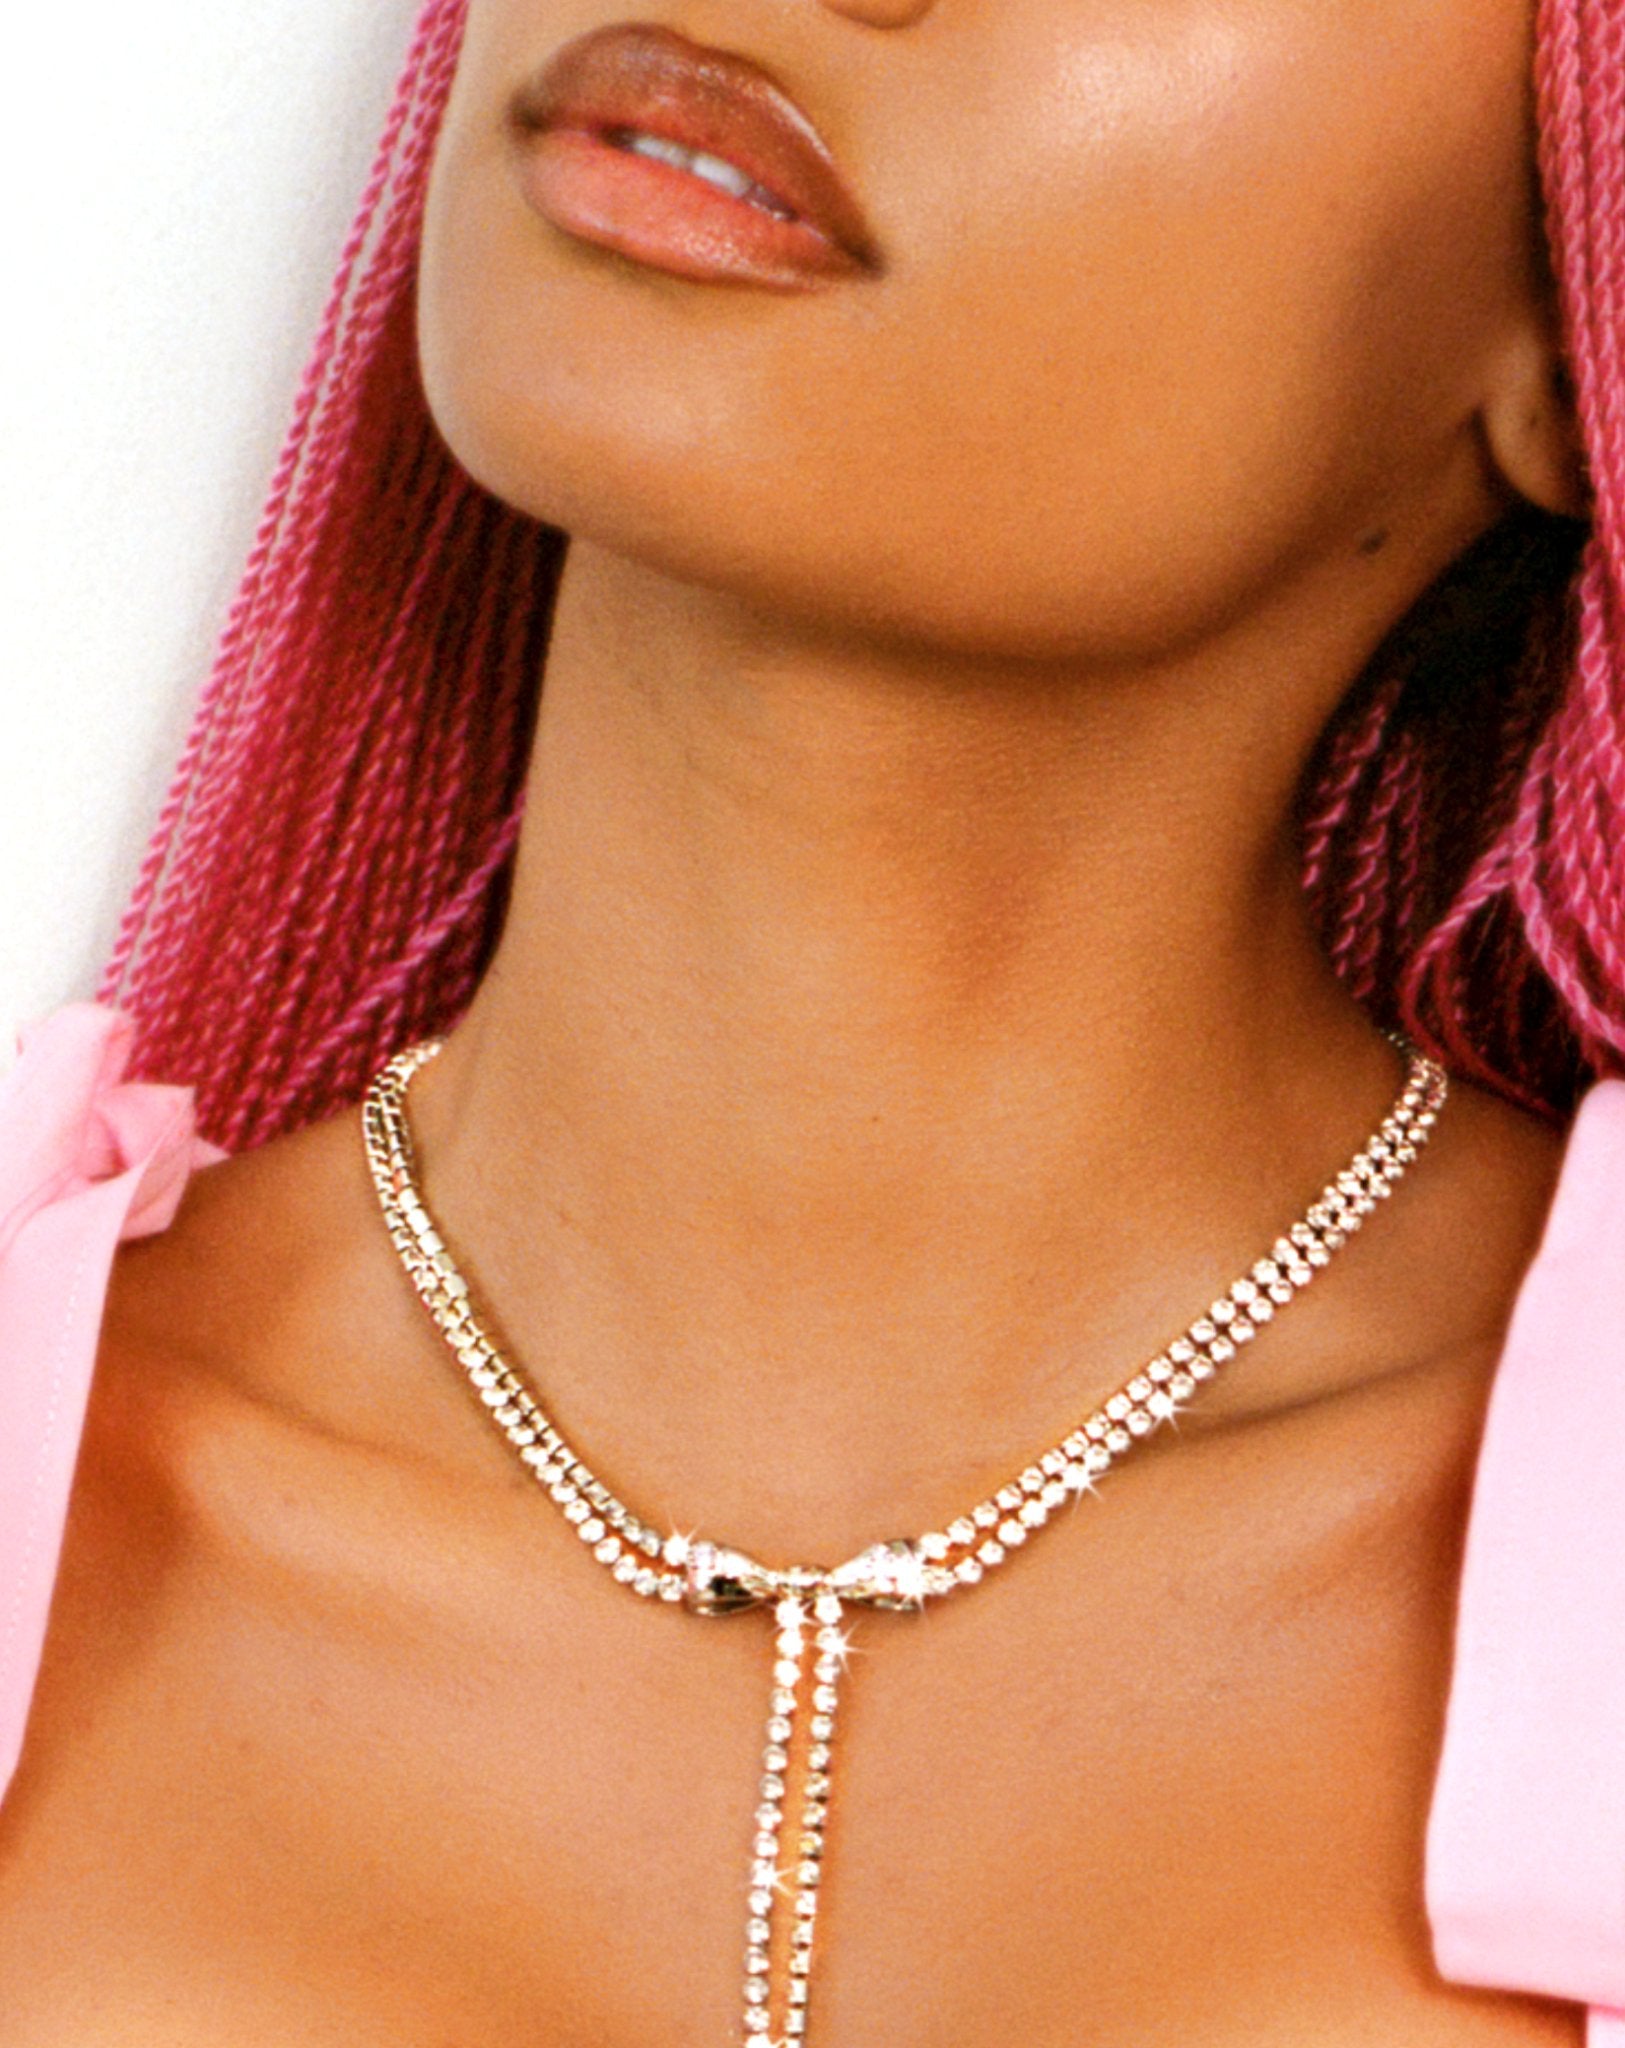 Cinna Doll Necklace